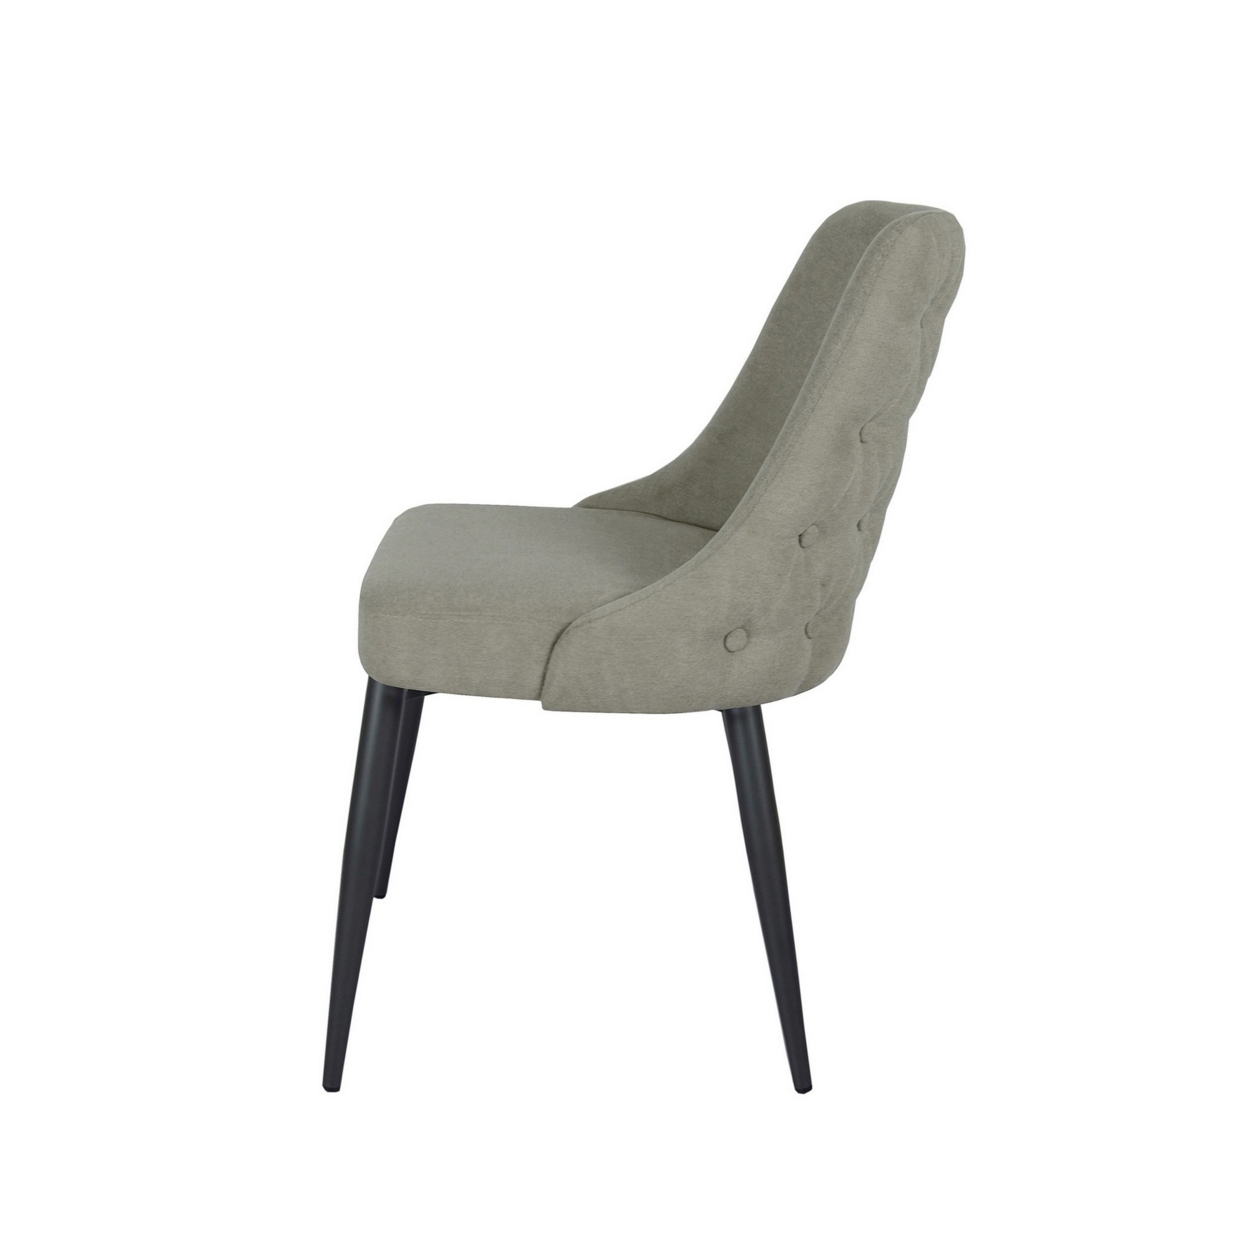 Glom 21 Inch Dining Chair, Set Of 2, Off White Upholstery, Tufted Backrest- Saltoro Sherpi